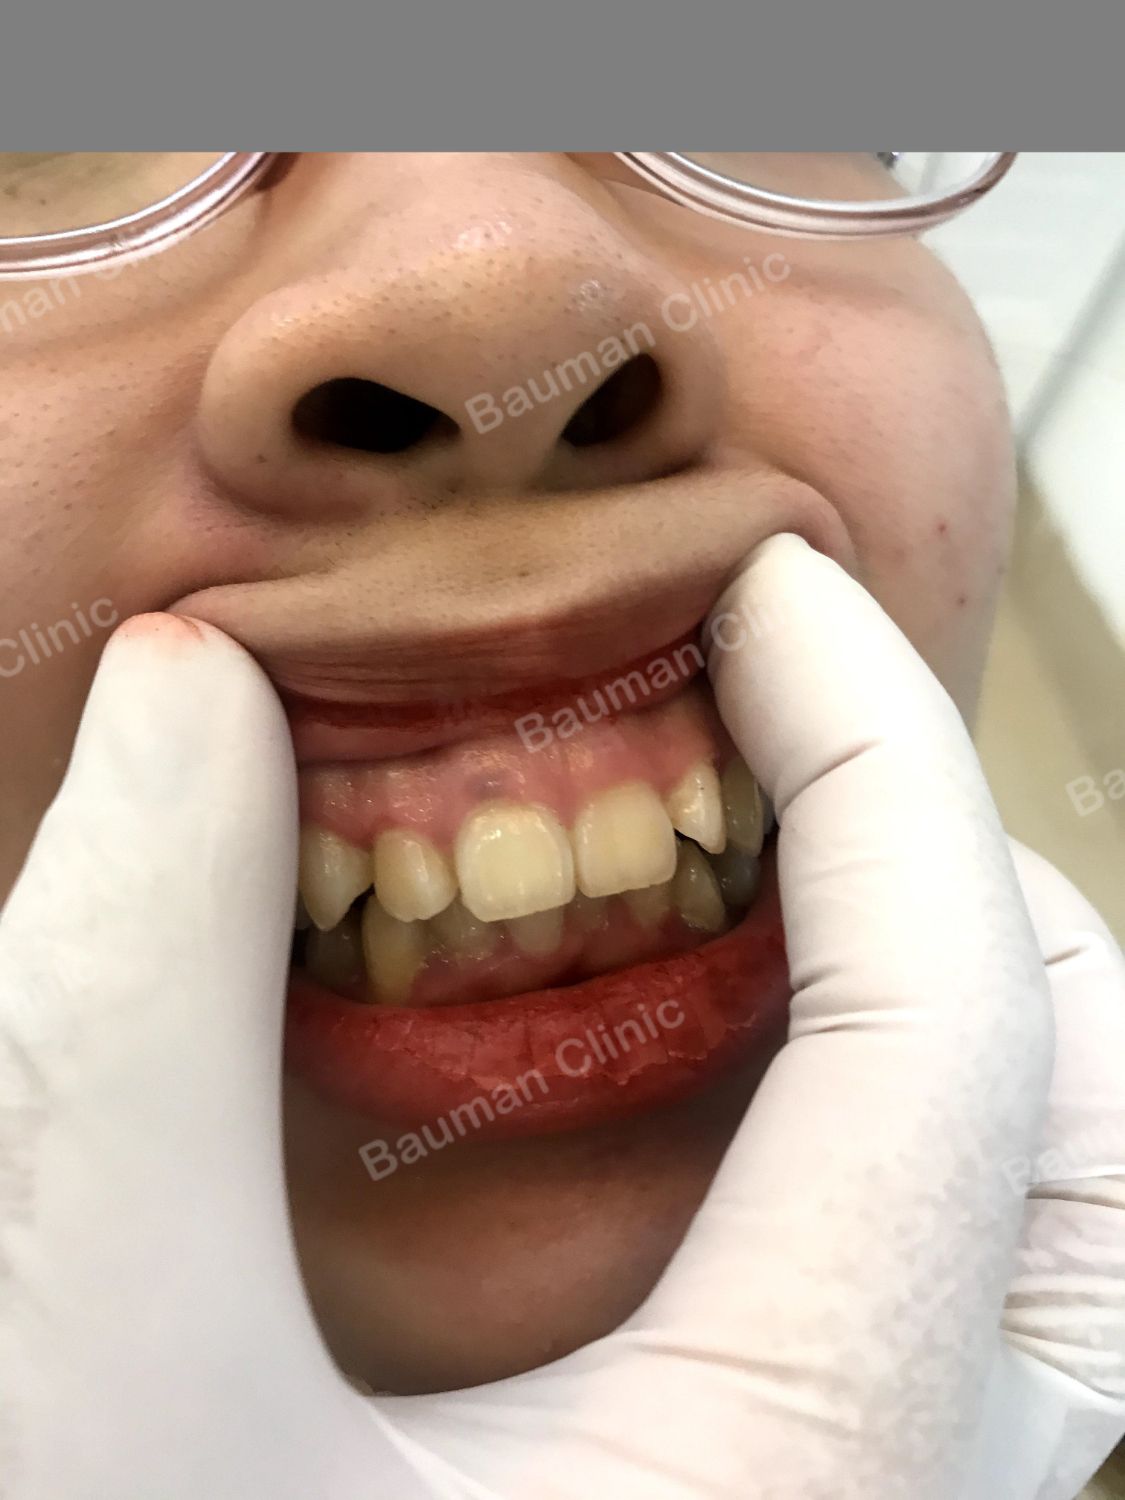 Ca niềng răng số 5014 - Nha khoa Bauman Clinic